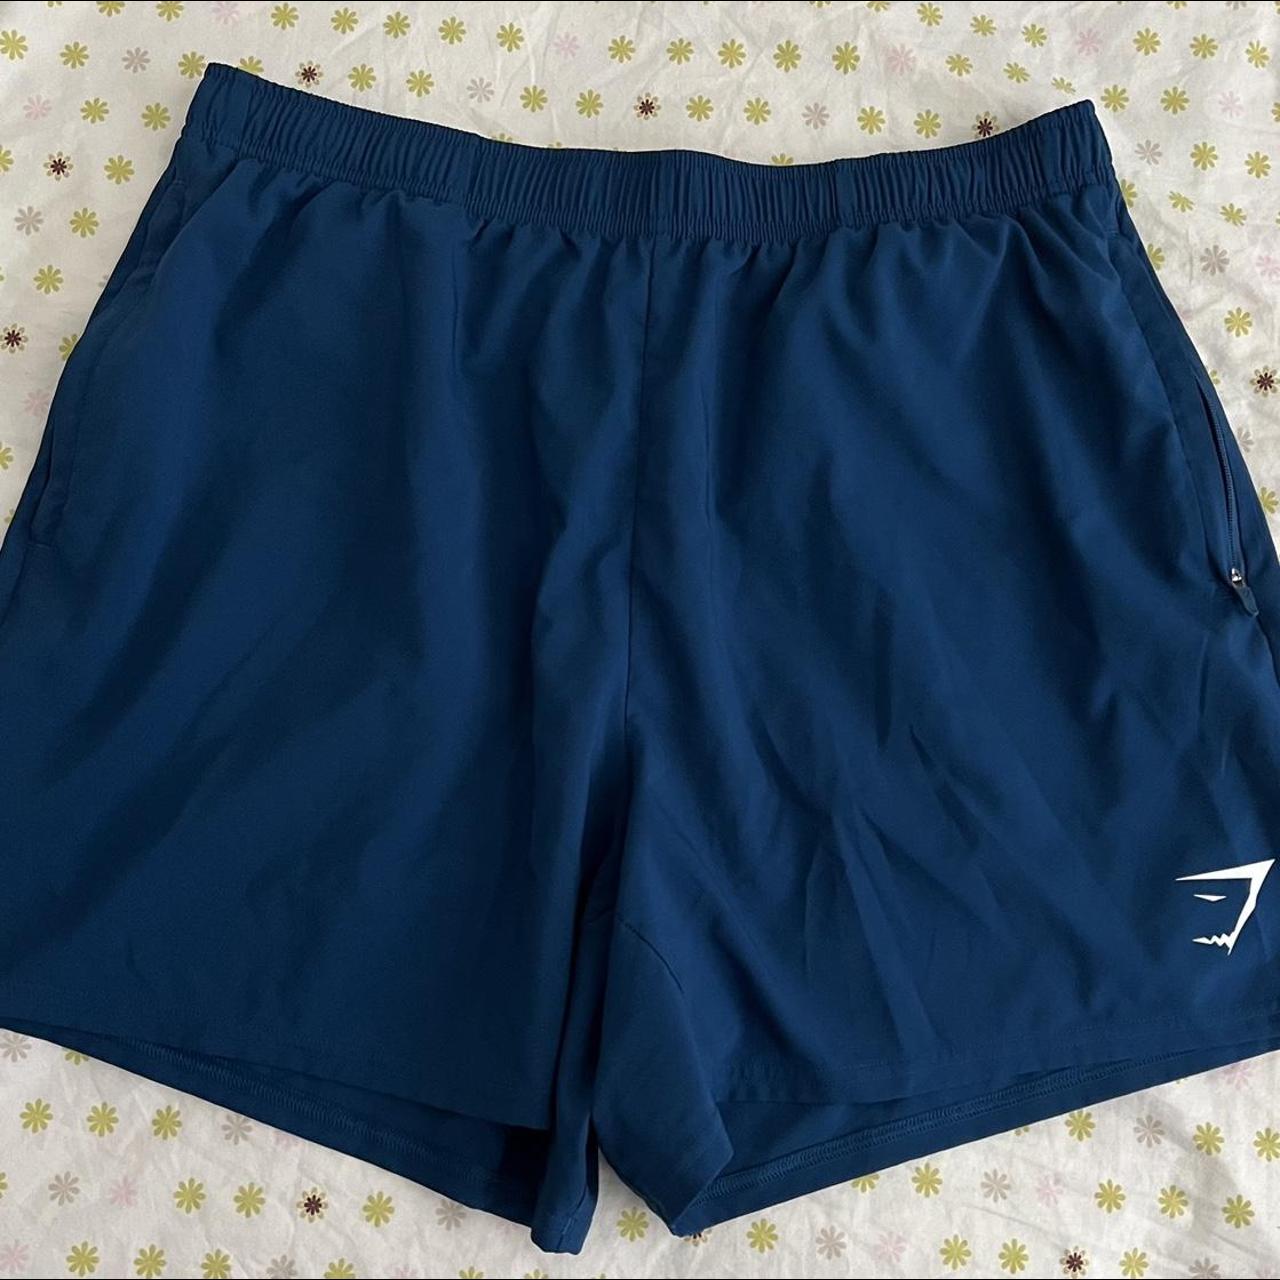 Gymshark navy short shorts, 5 inch inseam - Depop